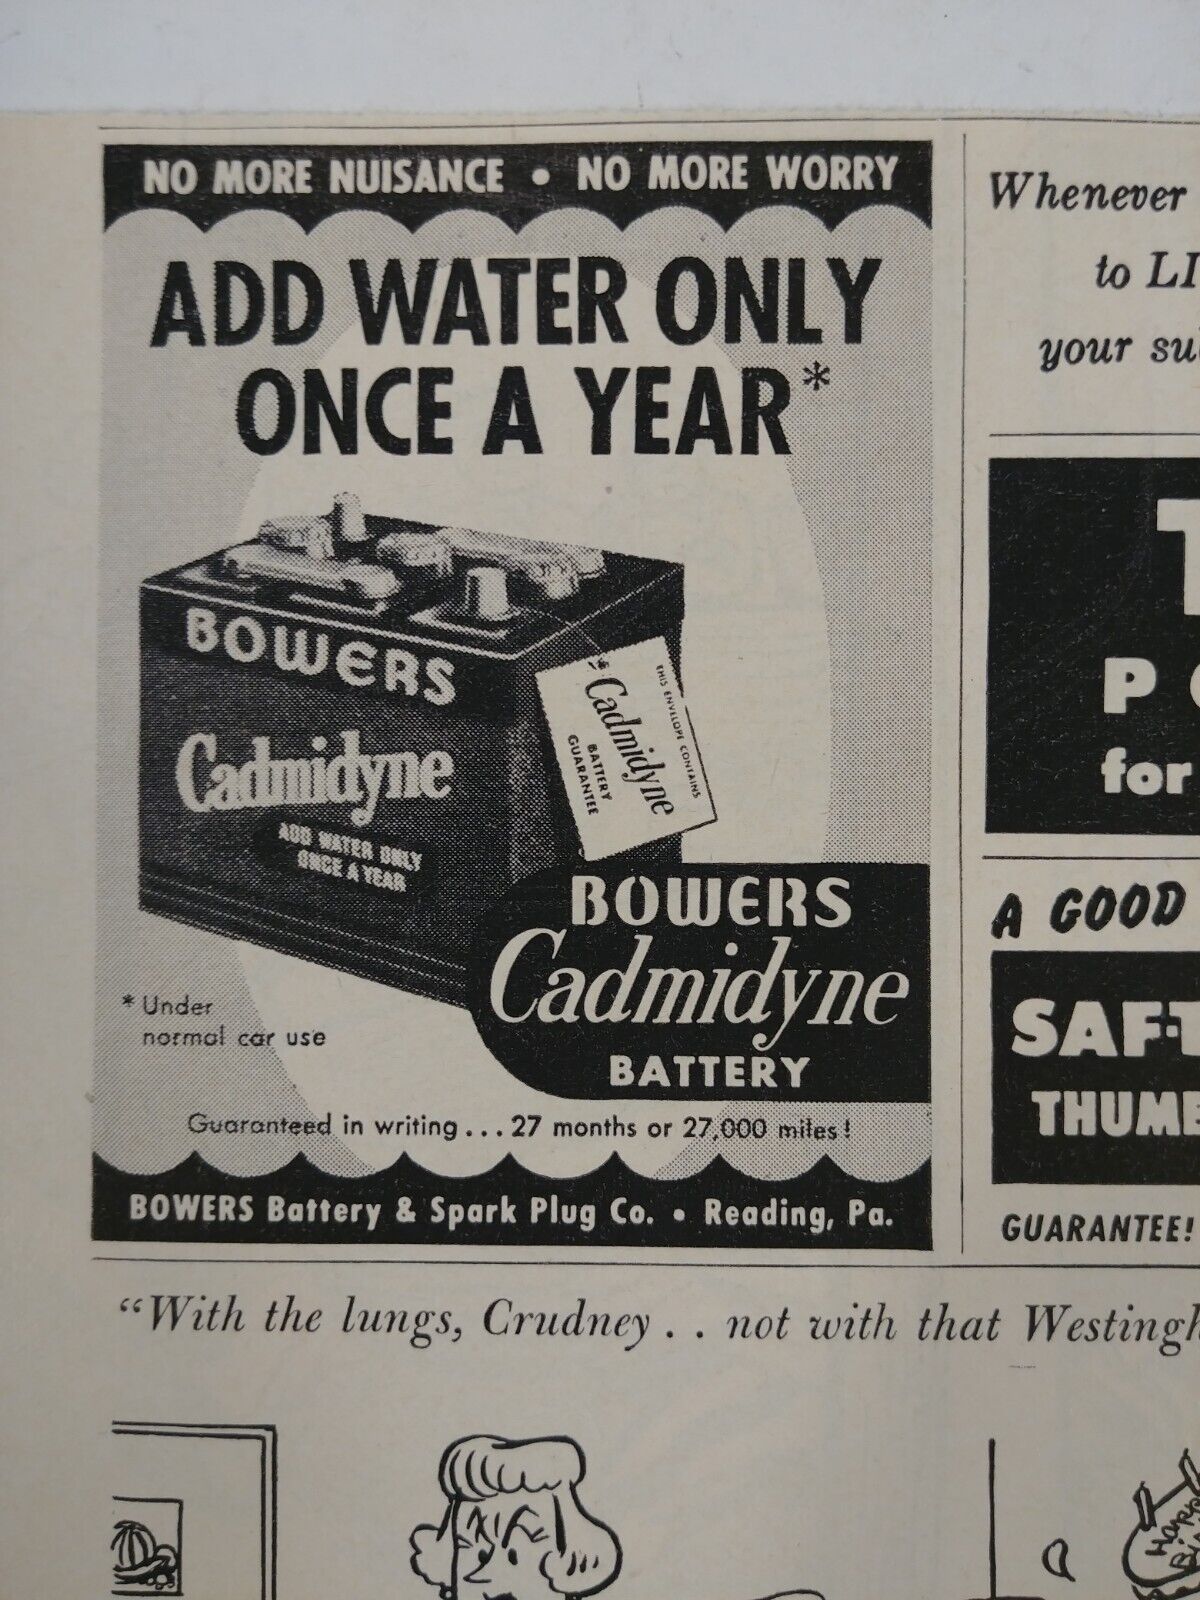 1952 Print Ads w/ Cartoon Bowers Cadmidyne Battery Life Magazine Advertising